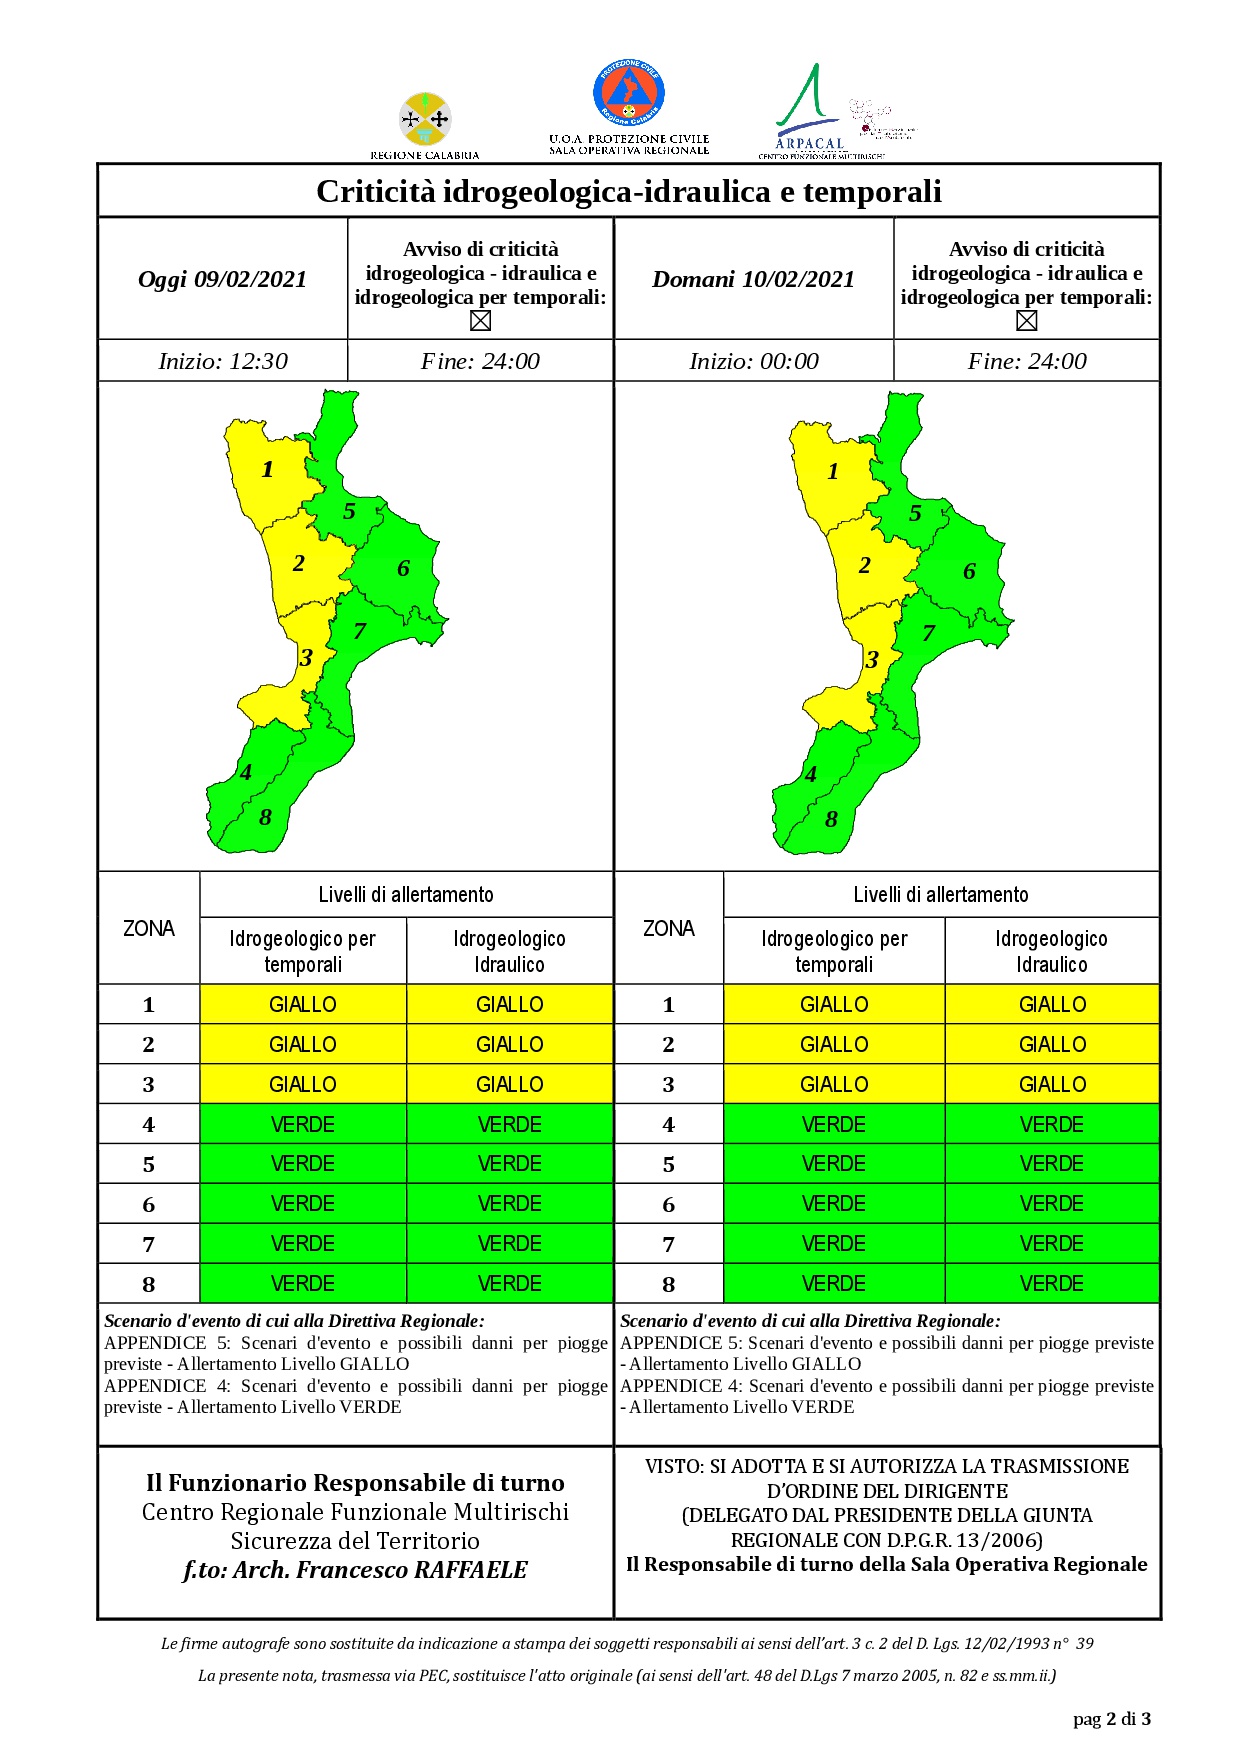 Criticità idrogeologica-idraulica e temporali in Calabria 09-02-2021